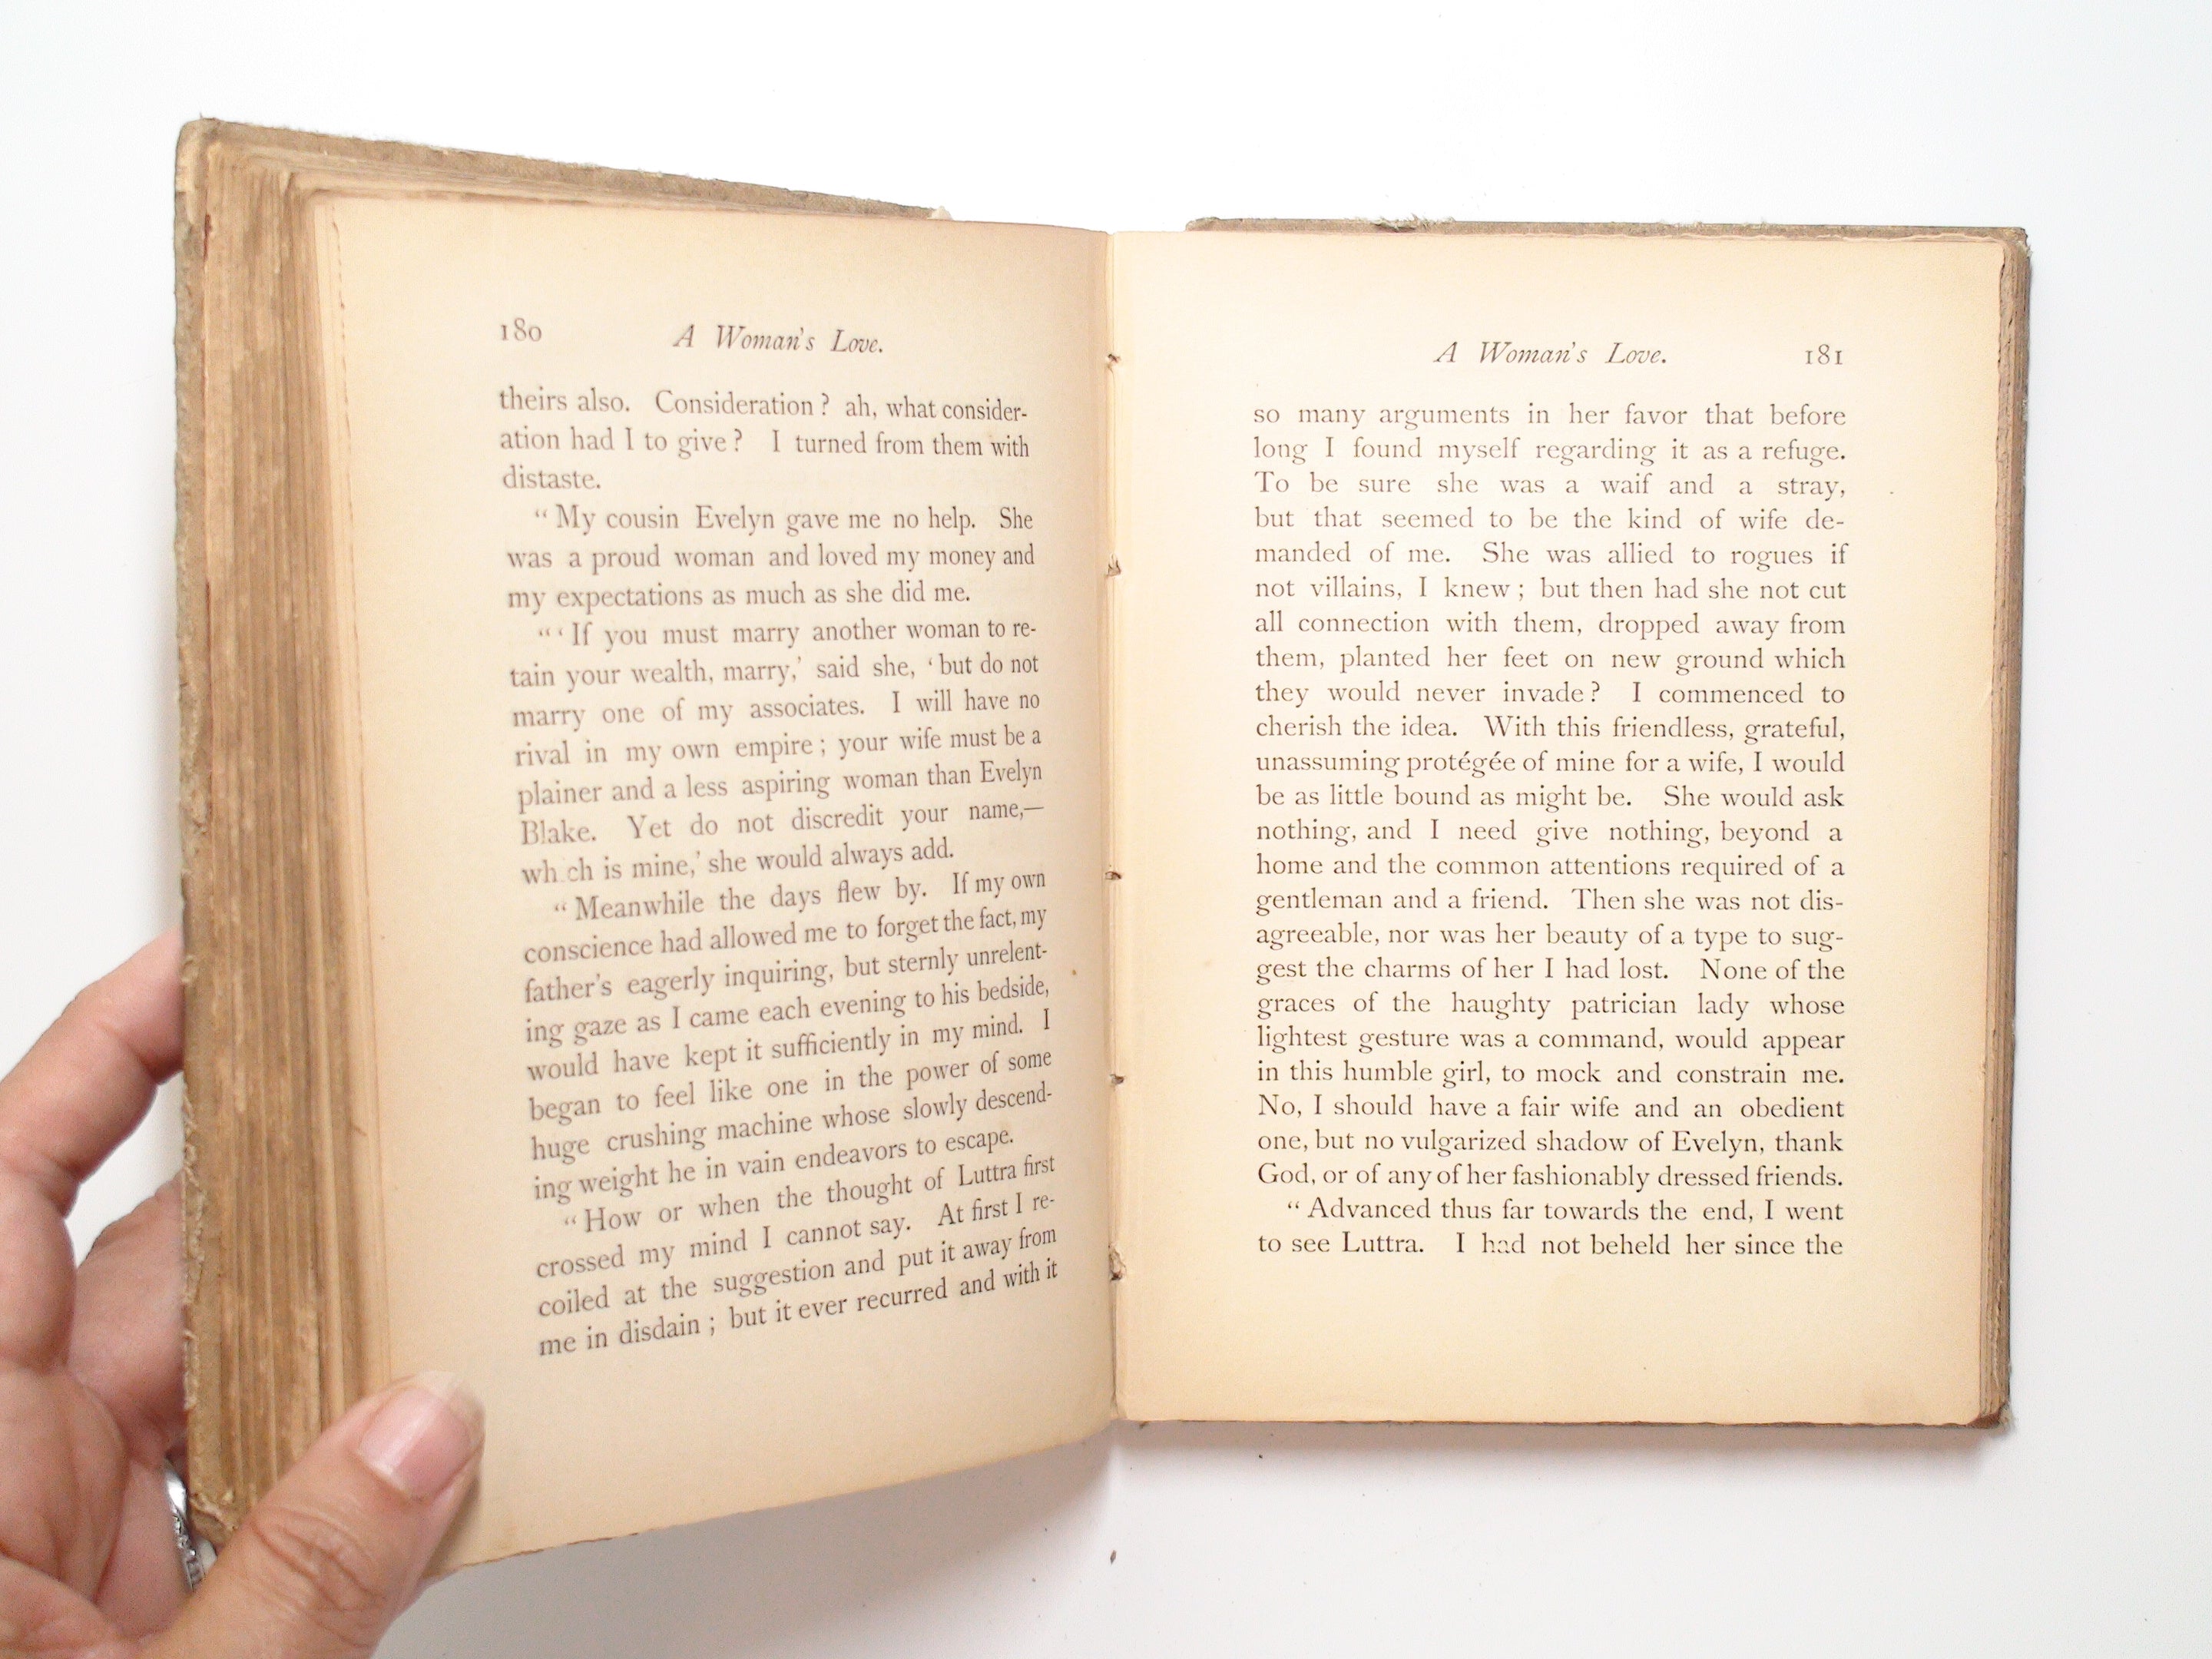 A Strange Disappearance, by Anna Katharine Green, Knickerbocker Novels, 1880